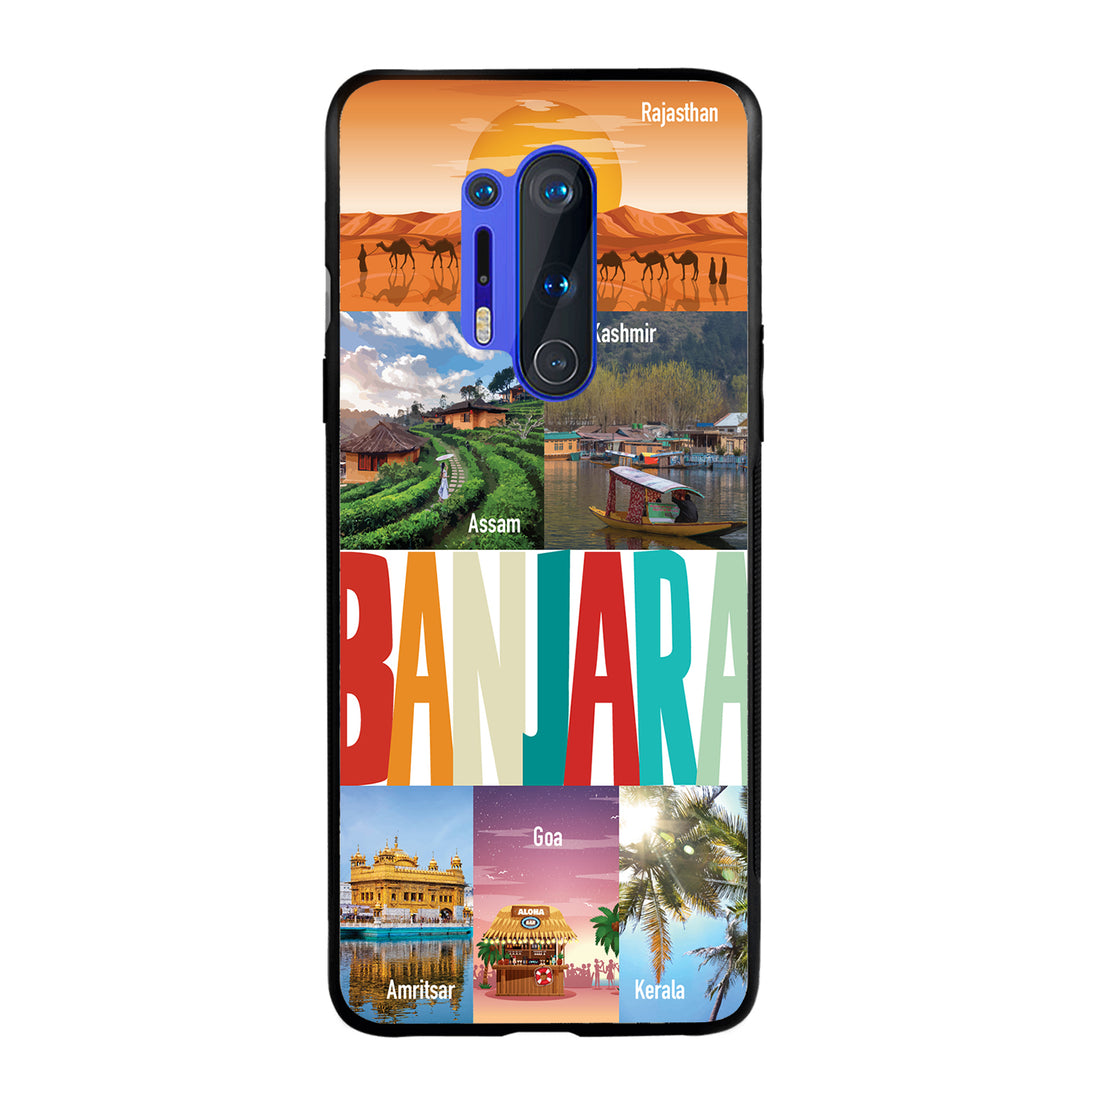 Banjara Travel Oneplus 8 Pro Back Case